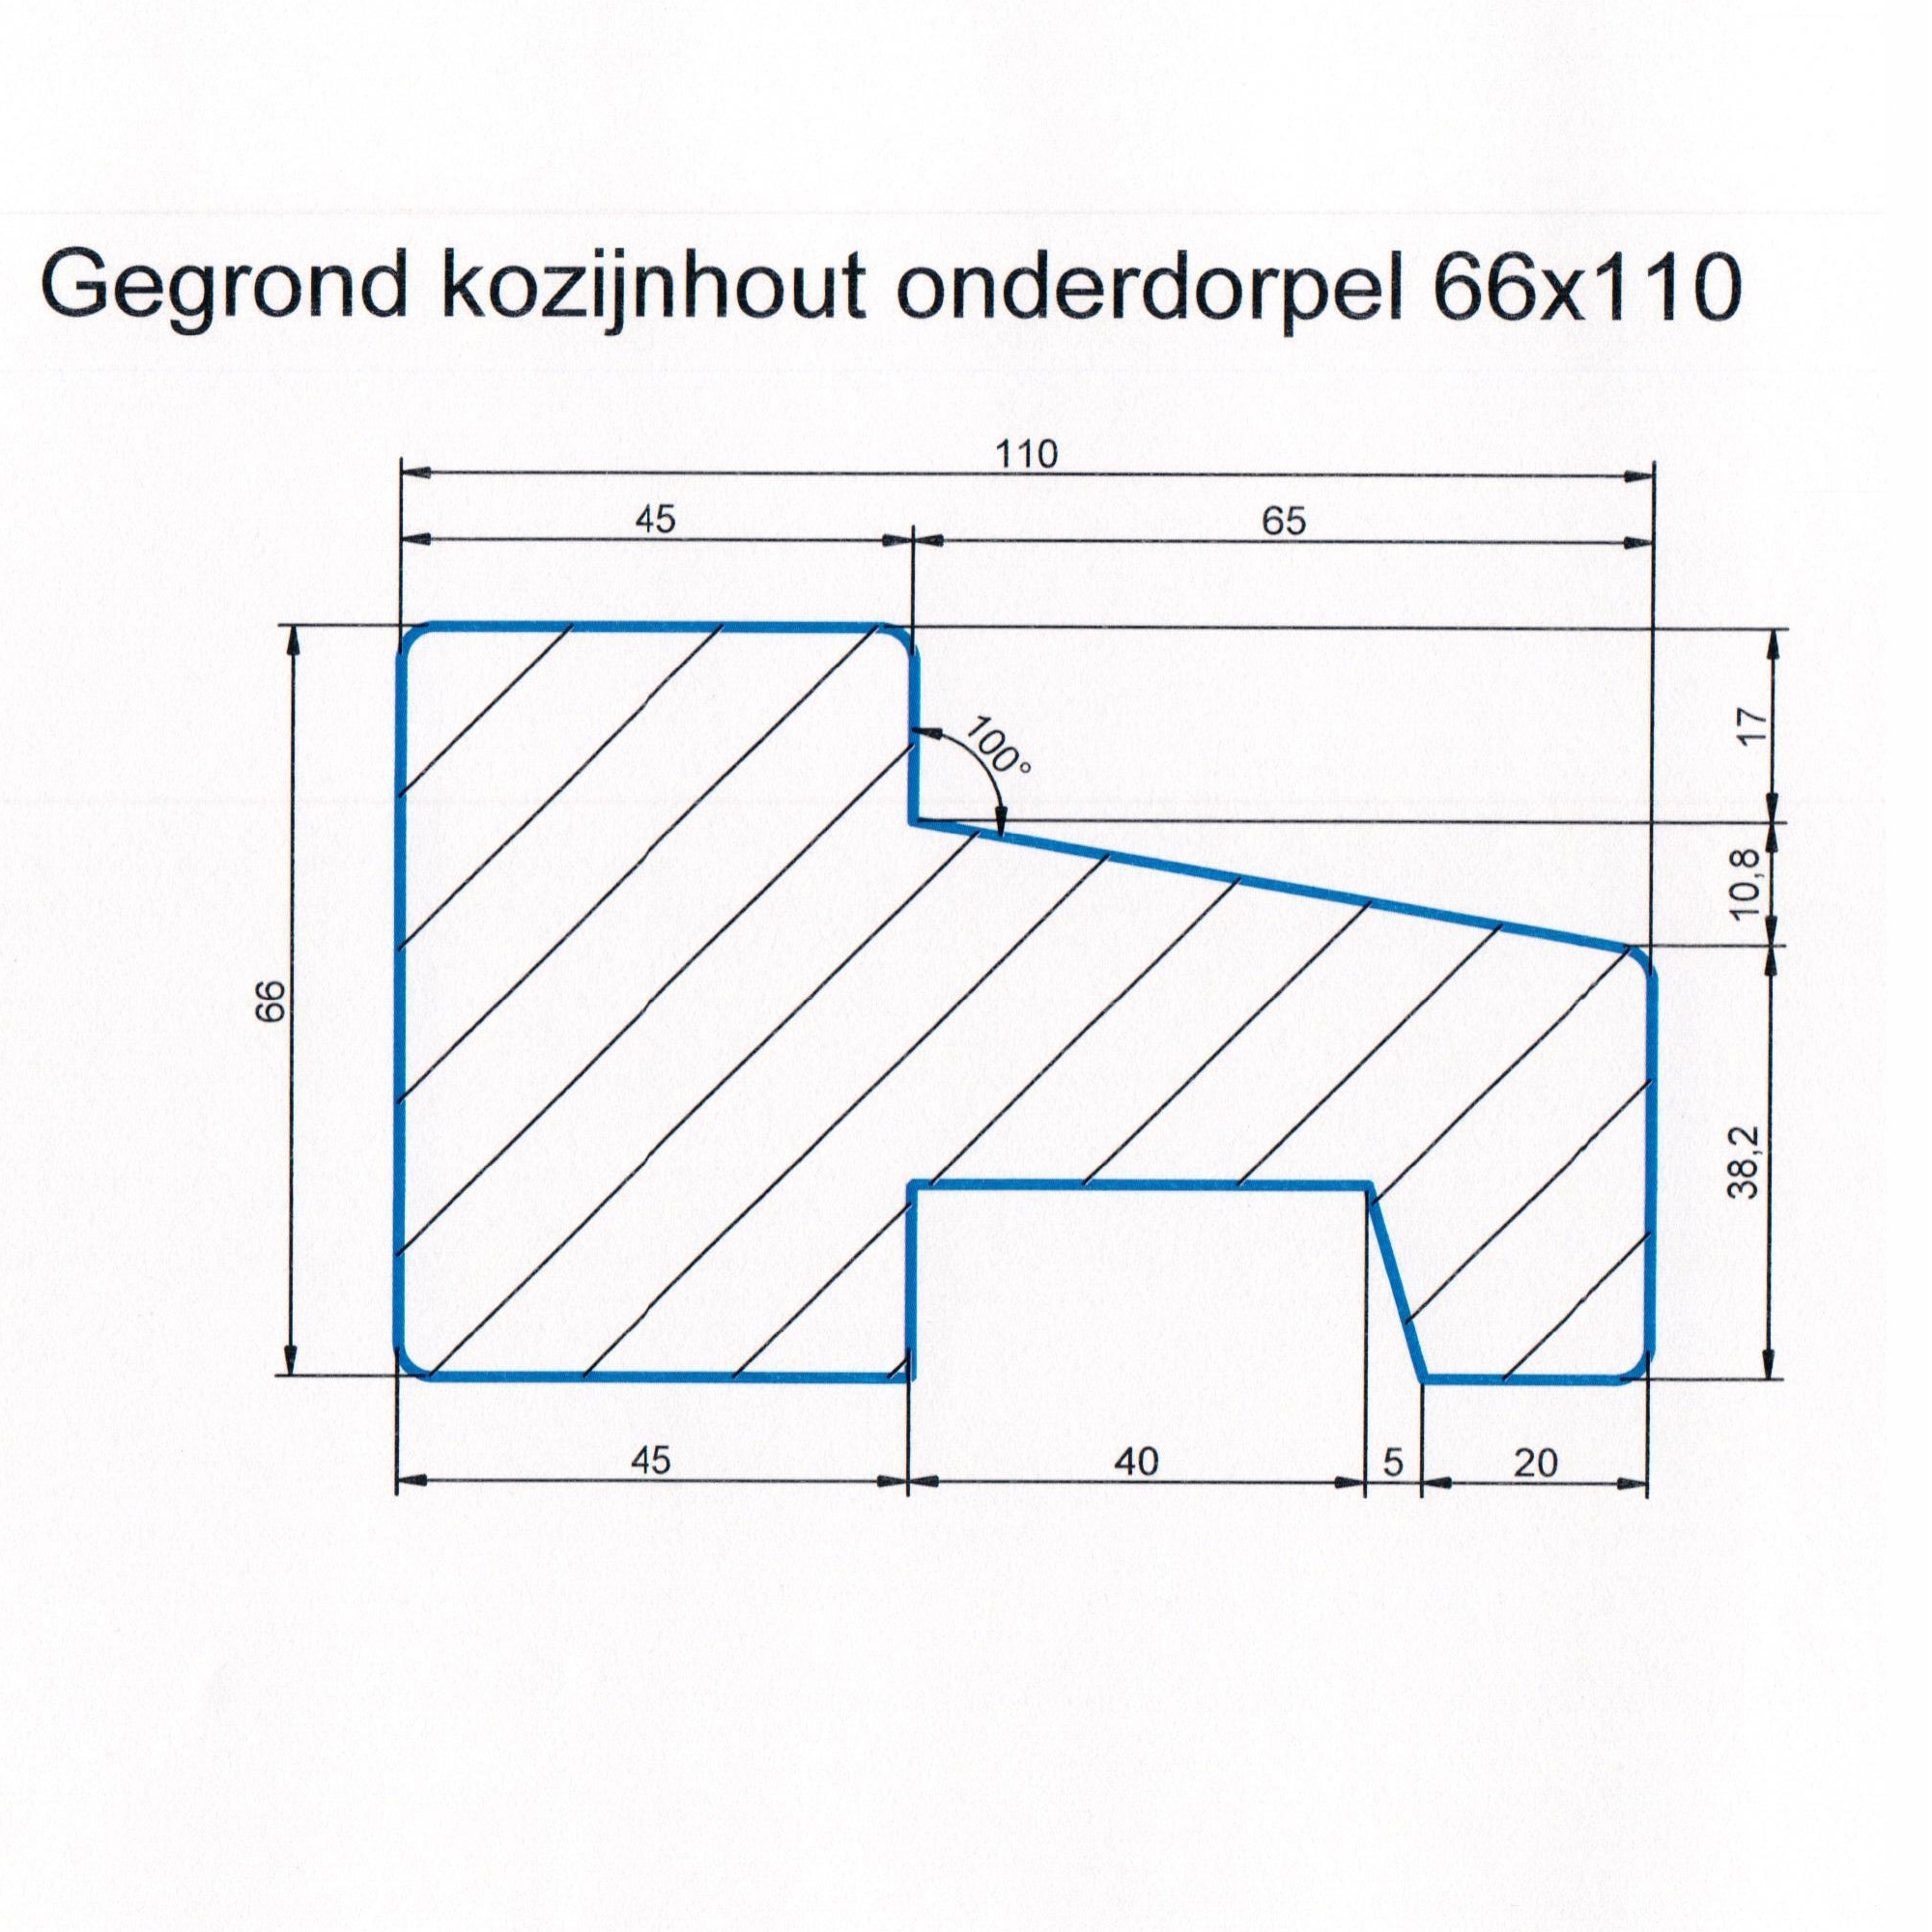 Hardhout 66x110 kozijnhout gegrond L=2360 onderdorpel